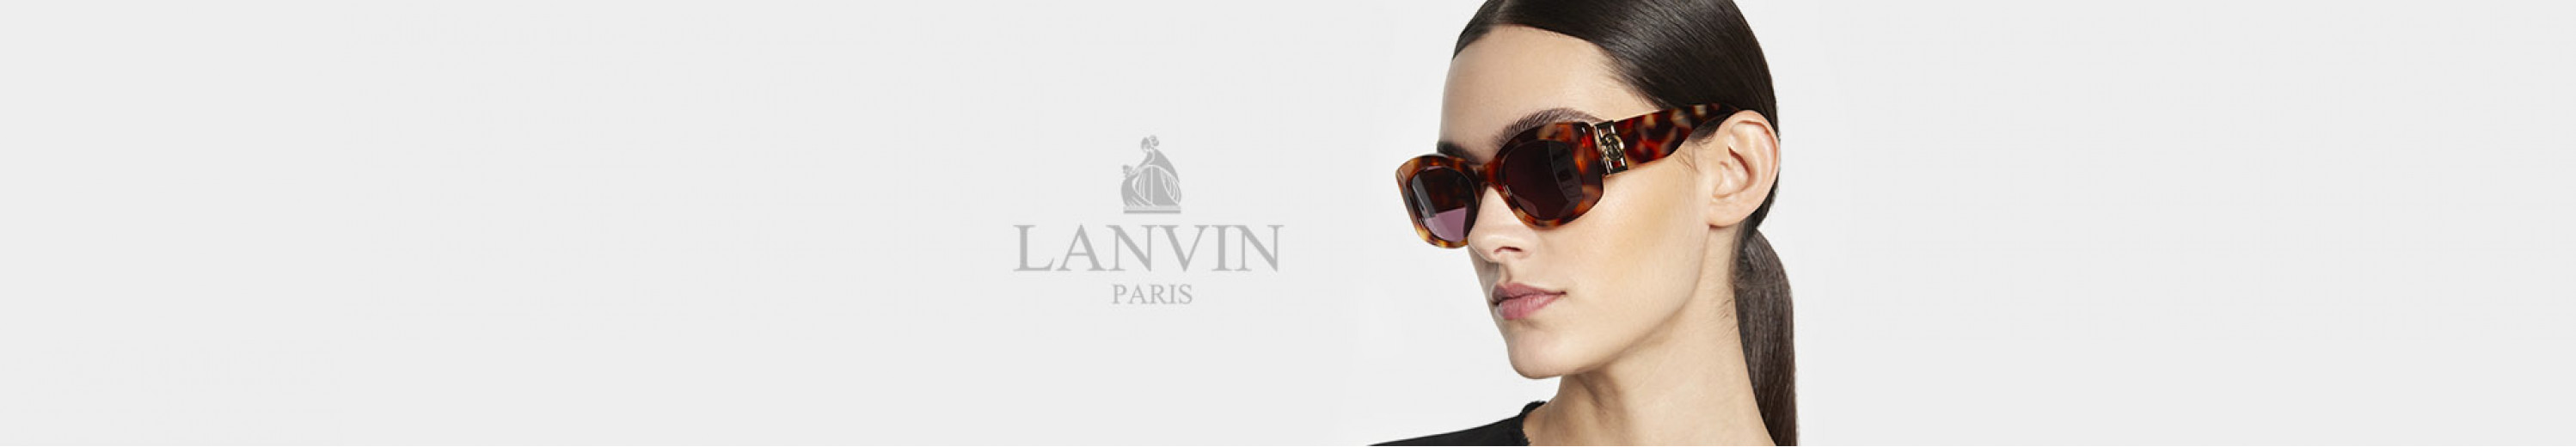 Lanvin Sunglasses for Women